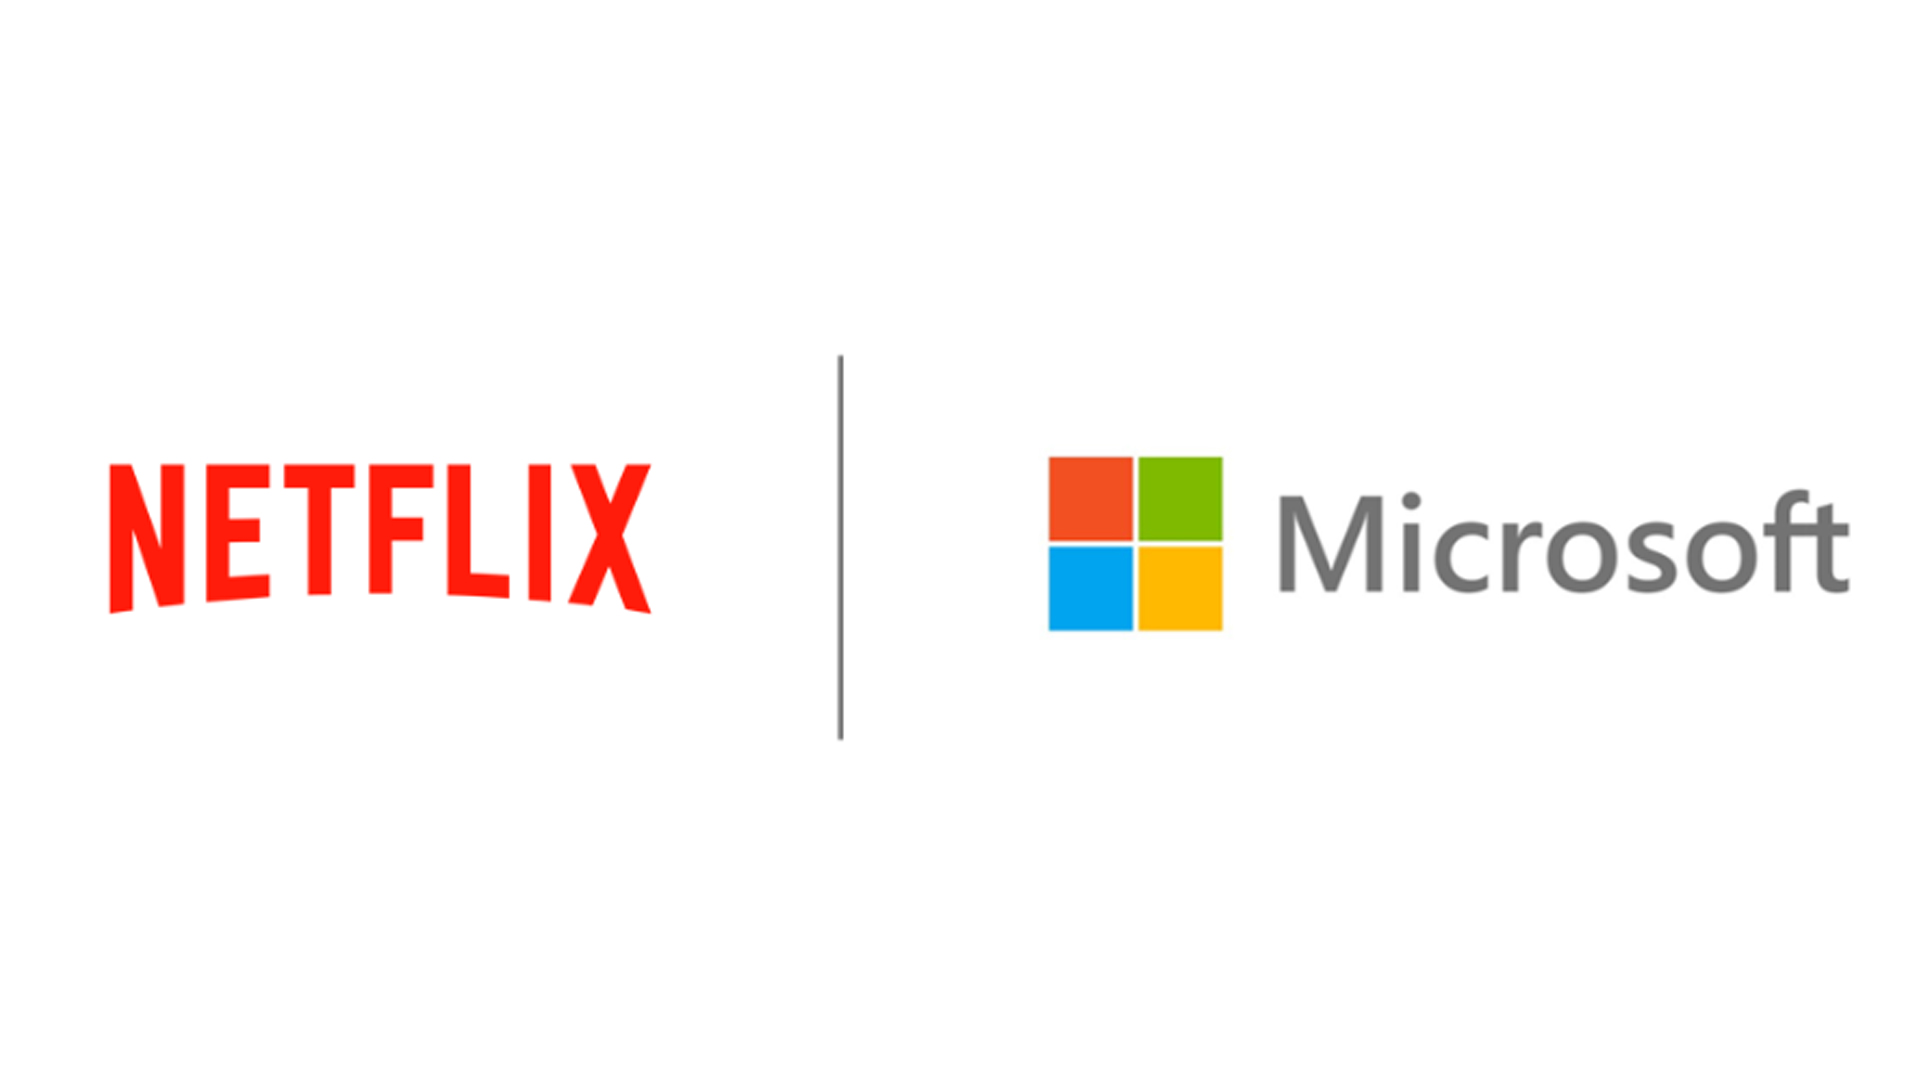 Netflix + Microsoft logos